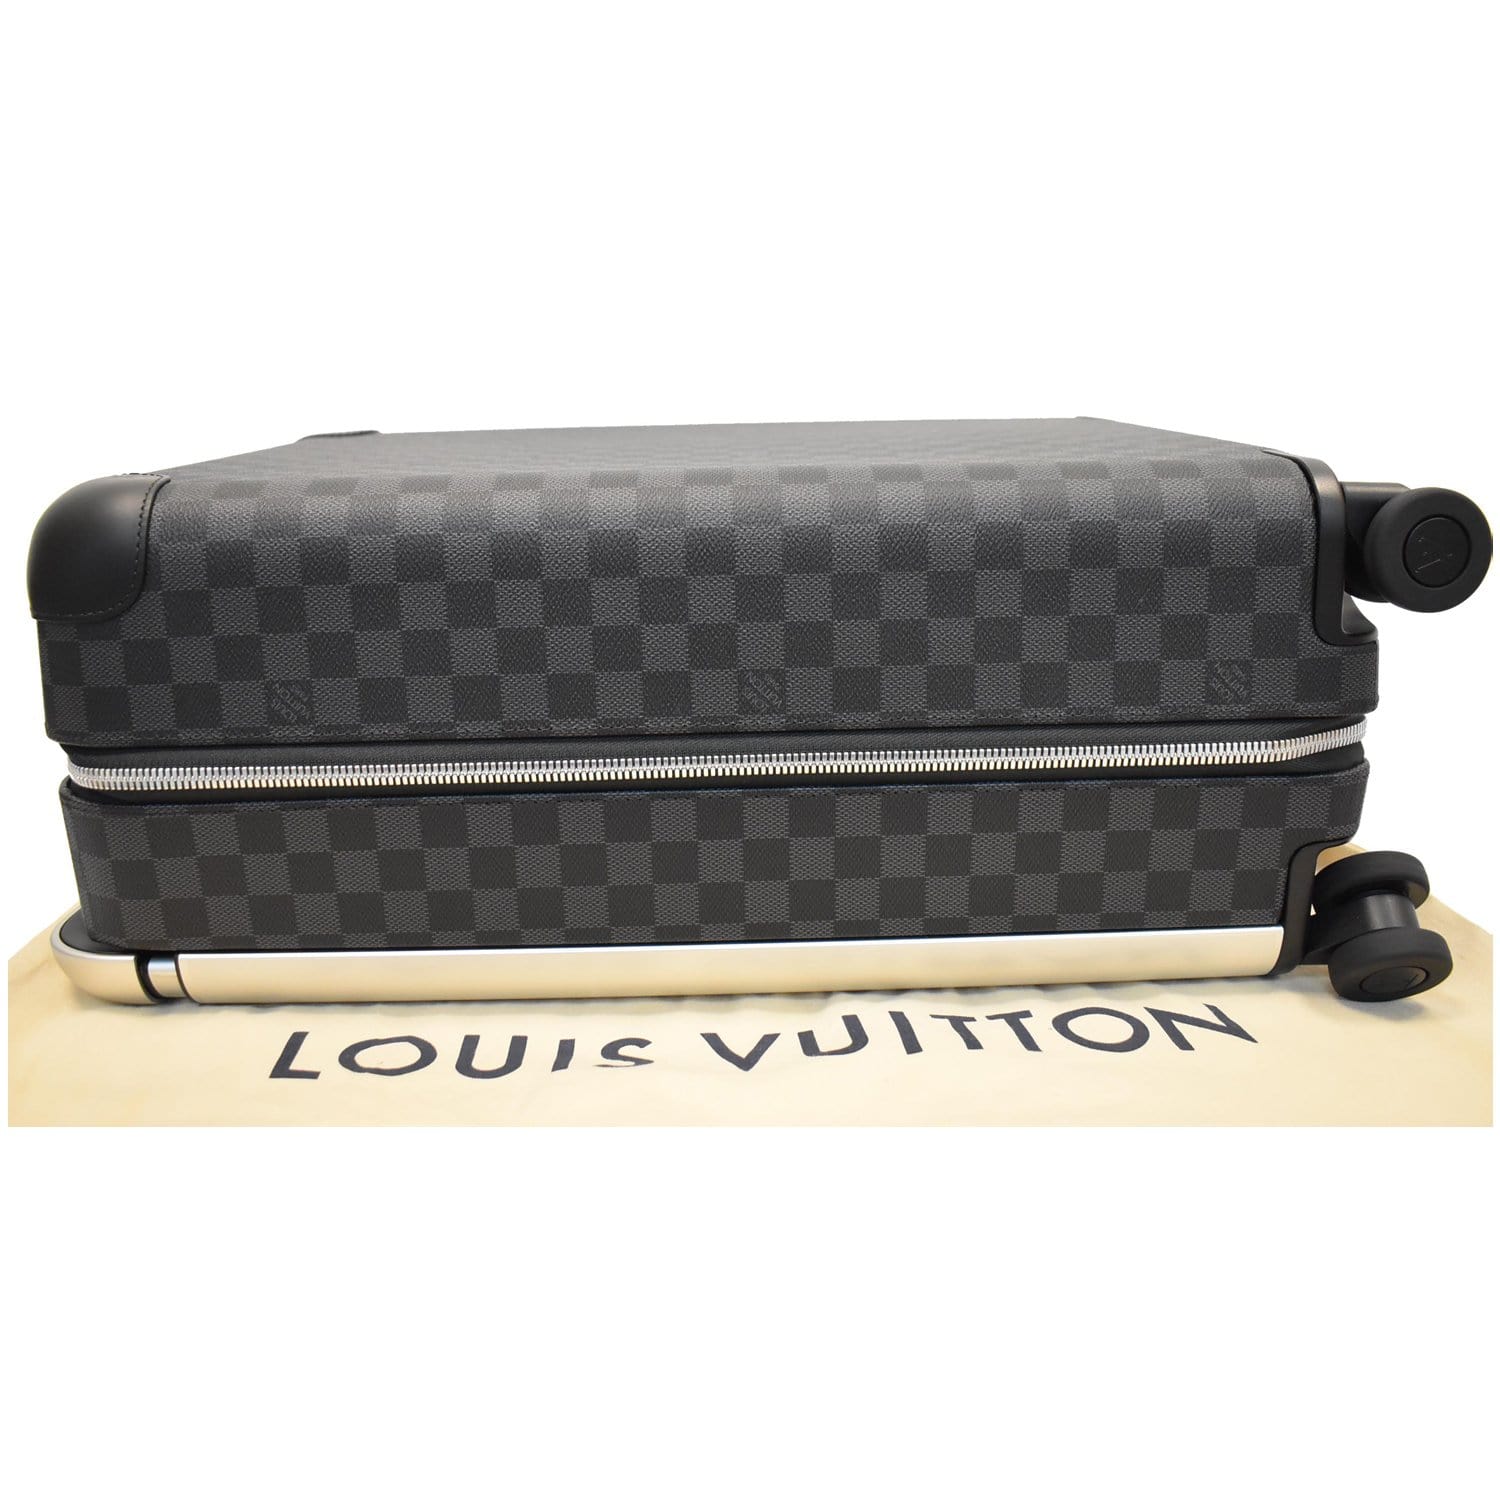 Louis Vuitton Horizon Damier Graphite 70 Black in Coated Canvas